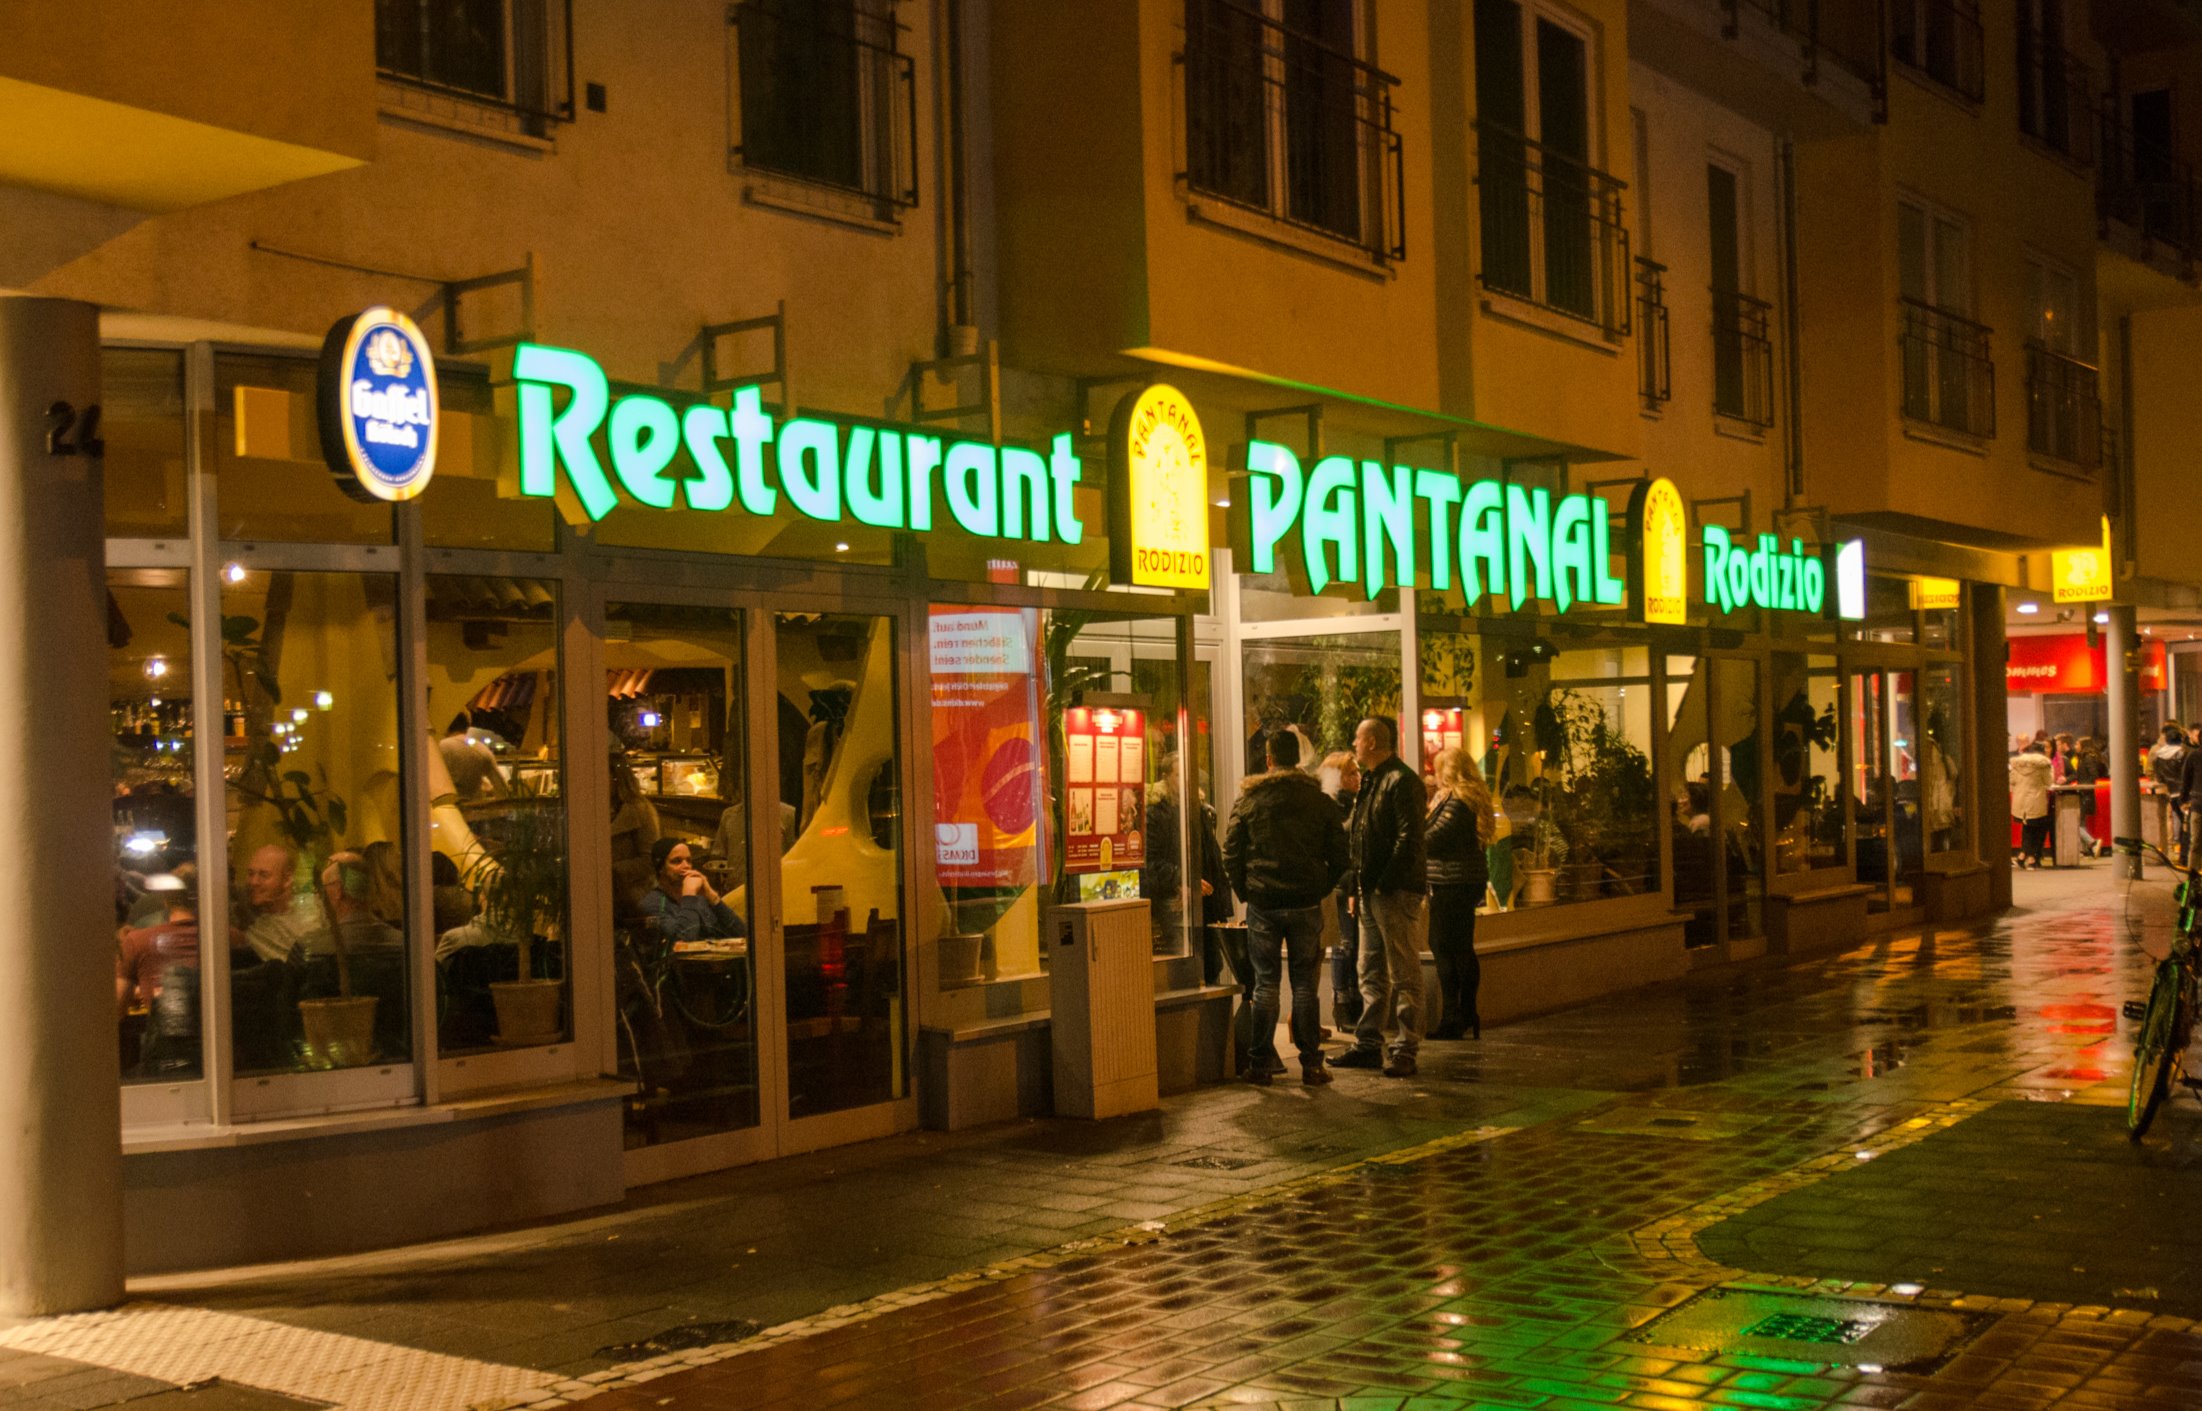 Restaurant Pantanal Rodizio, Maybachstraße 22 in Köln